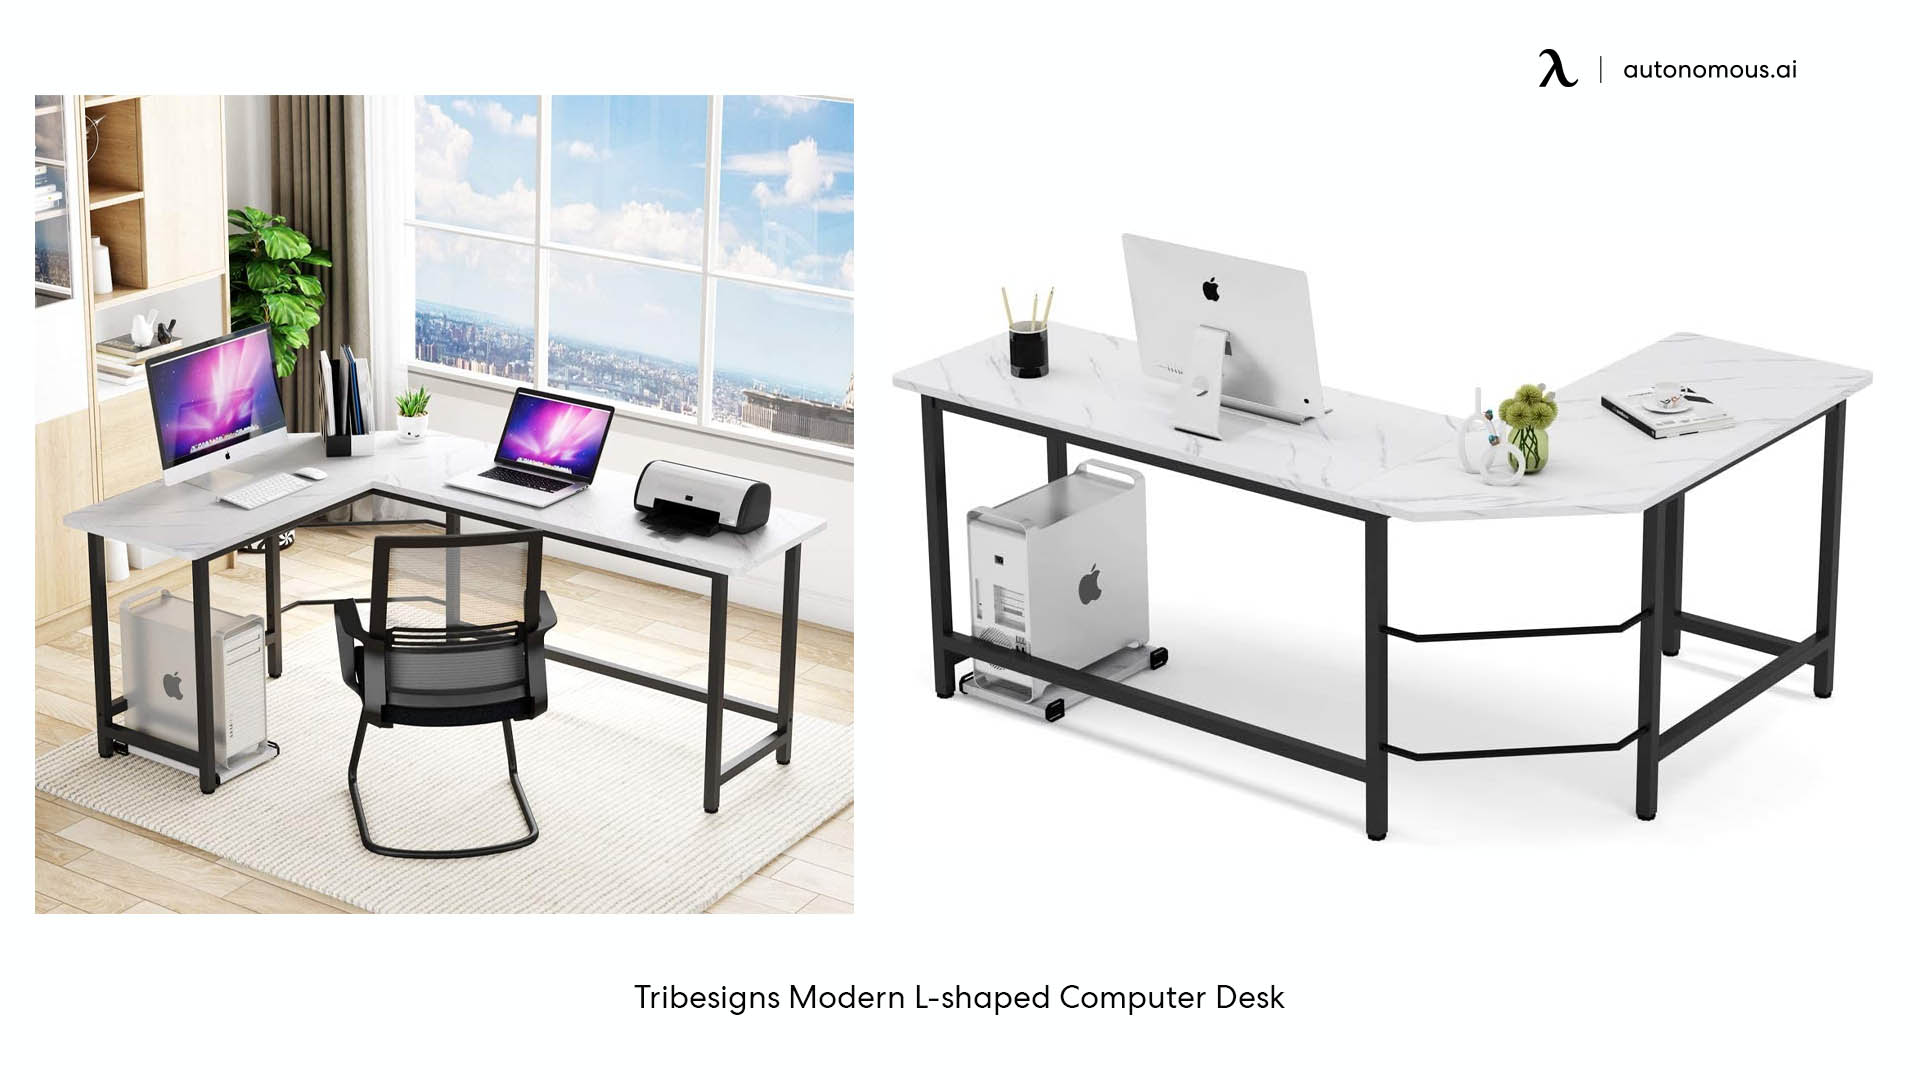 Tribesigns Modern L-shaped Computer Desk